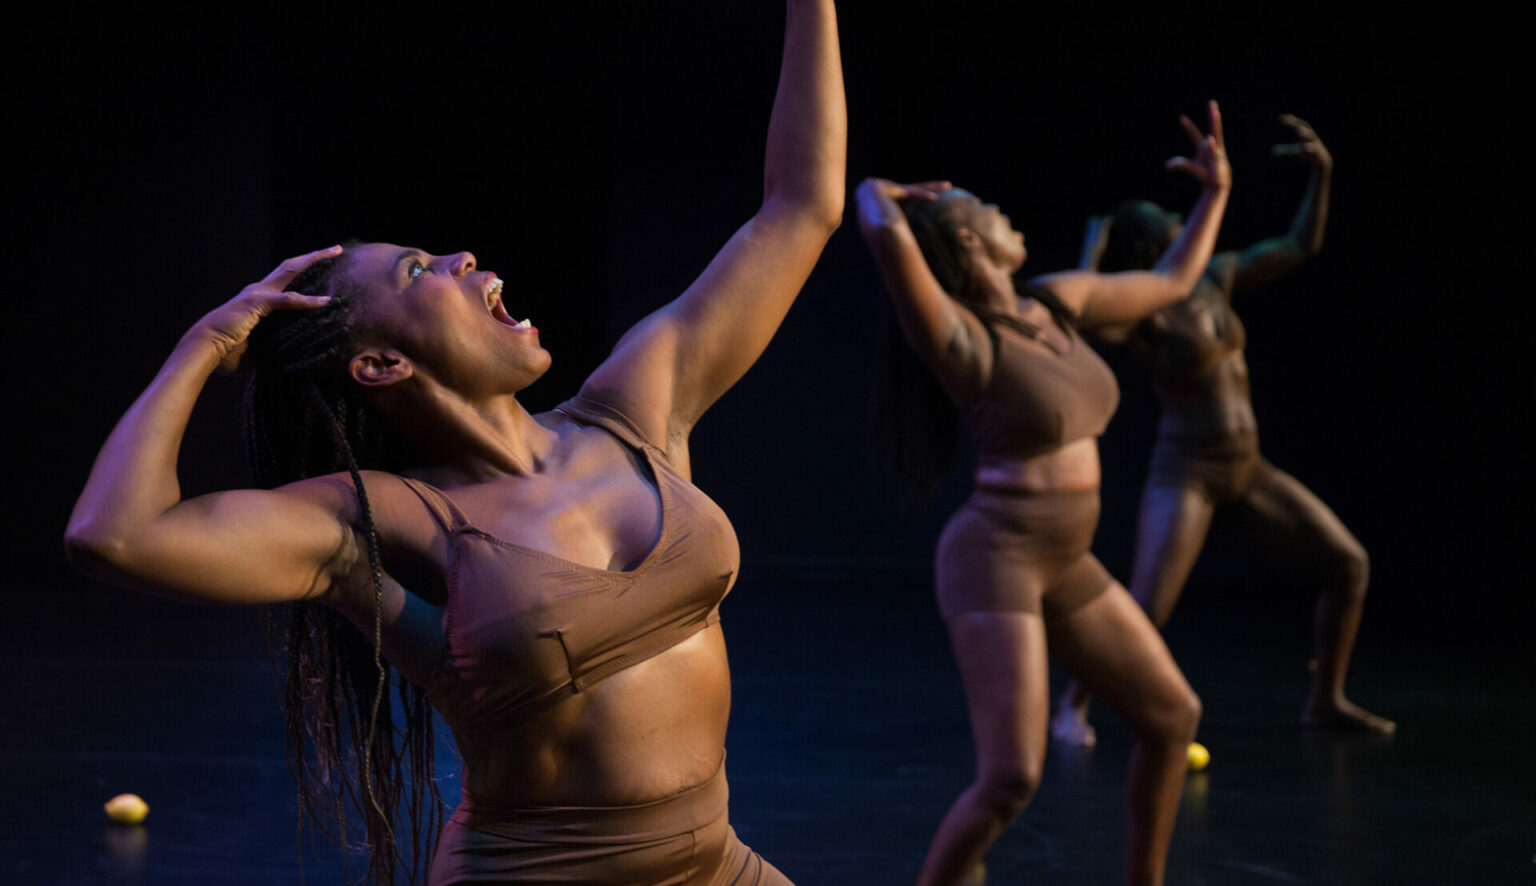 The performance “W.O.M.B” - part of Det Frie Felts Festival 2023 at the dance theater Bora Bora